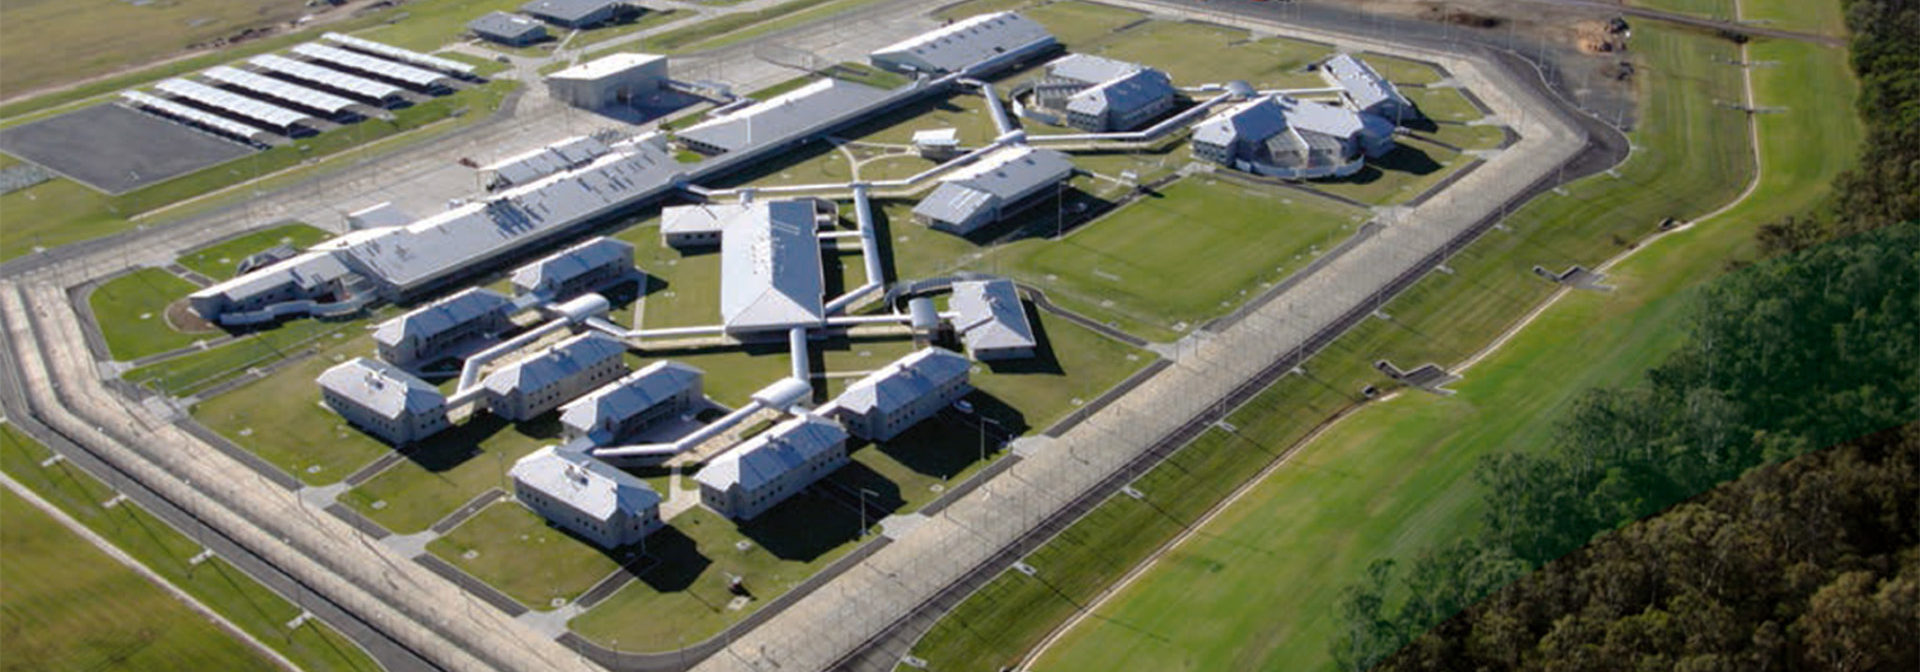 Video surveillance for 300-bed men’s prison at Gatton in Southern Queensland, Australia.